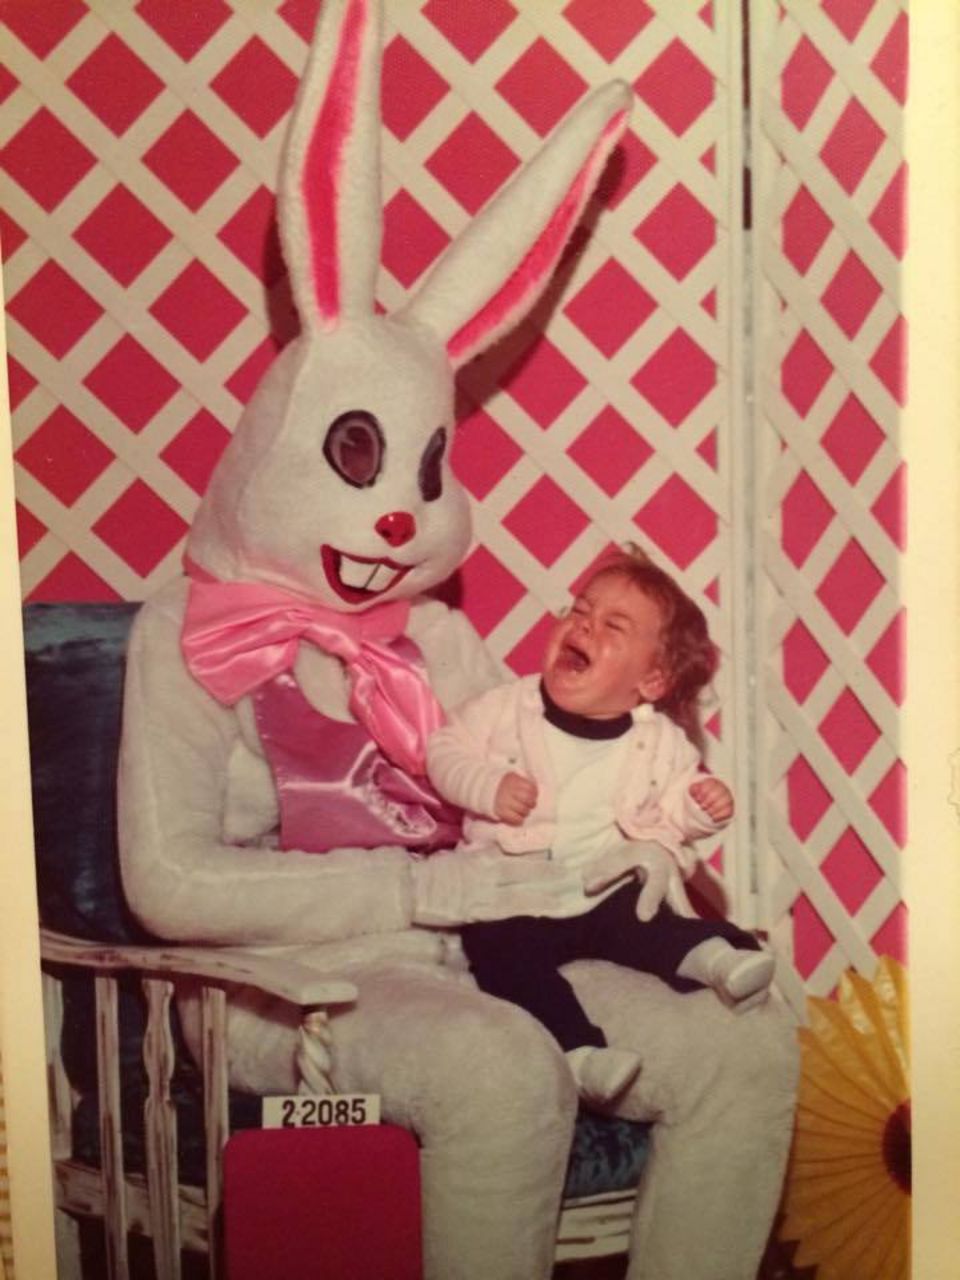 terrifying easter bunnies - Easter Bunny - 22085